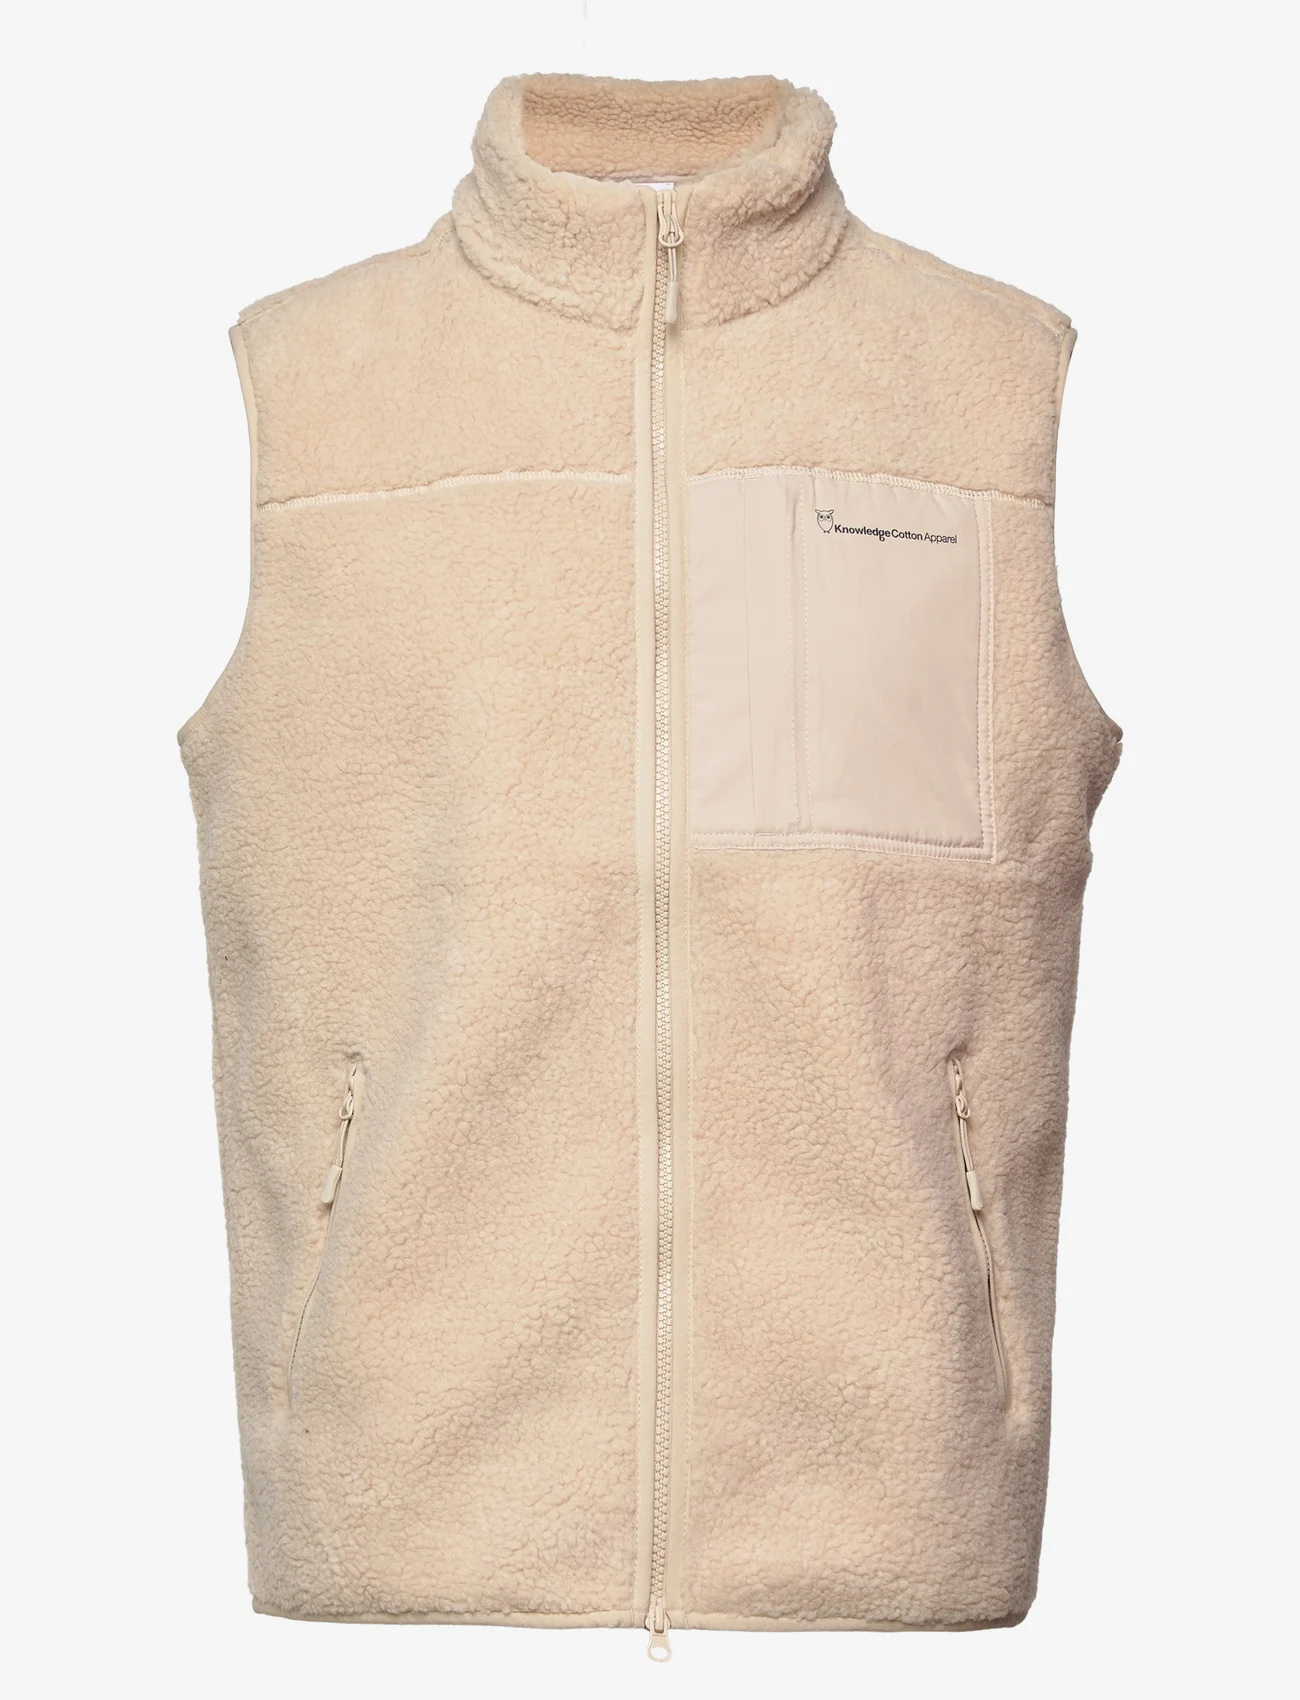 Knowledge Cotton Apparel - Teddy fleece vest - GRS/Vegan - liivit - item colour - 0